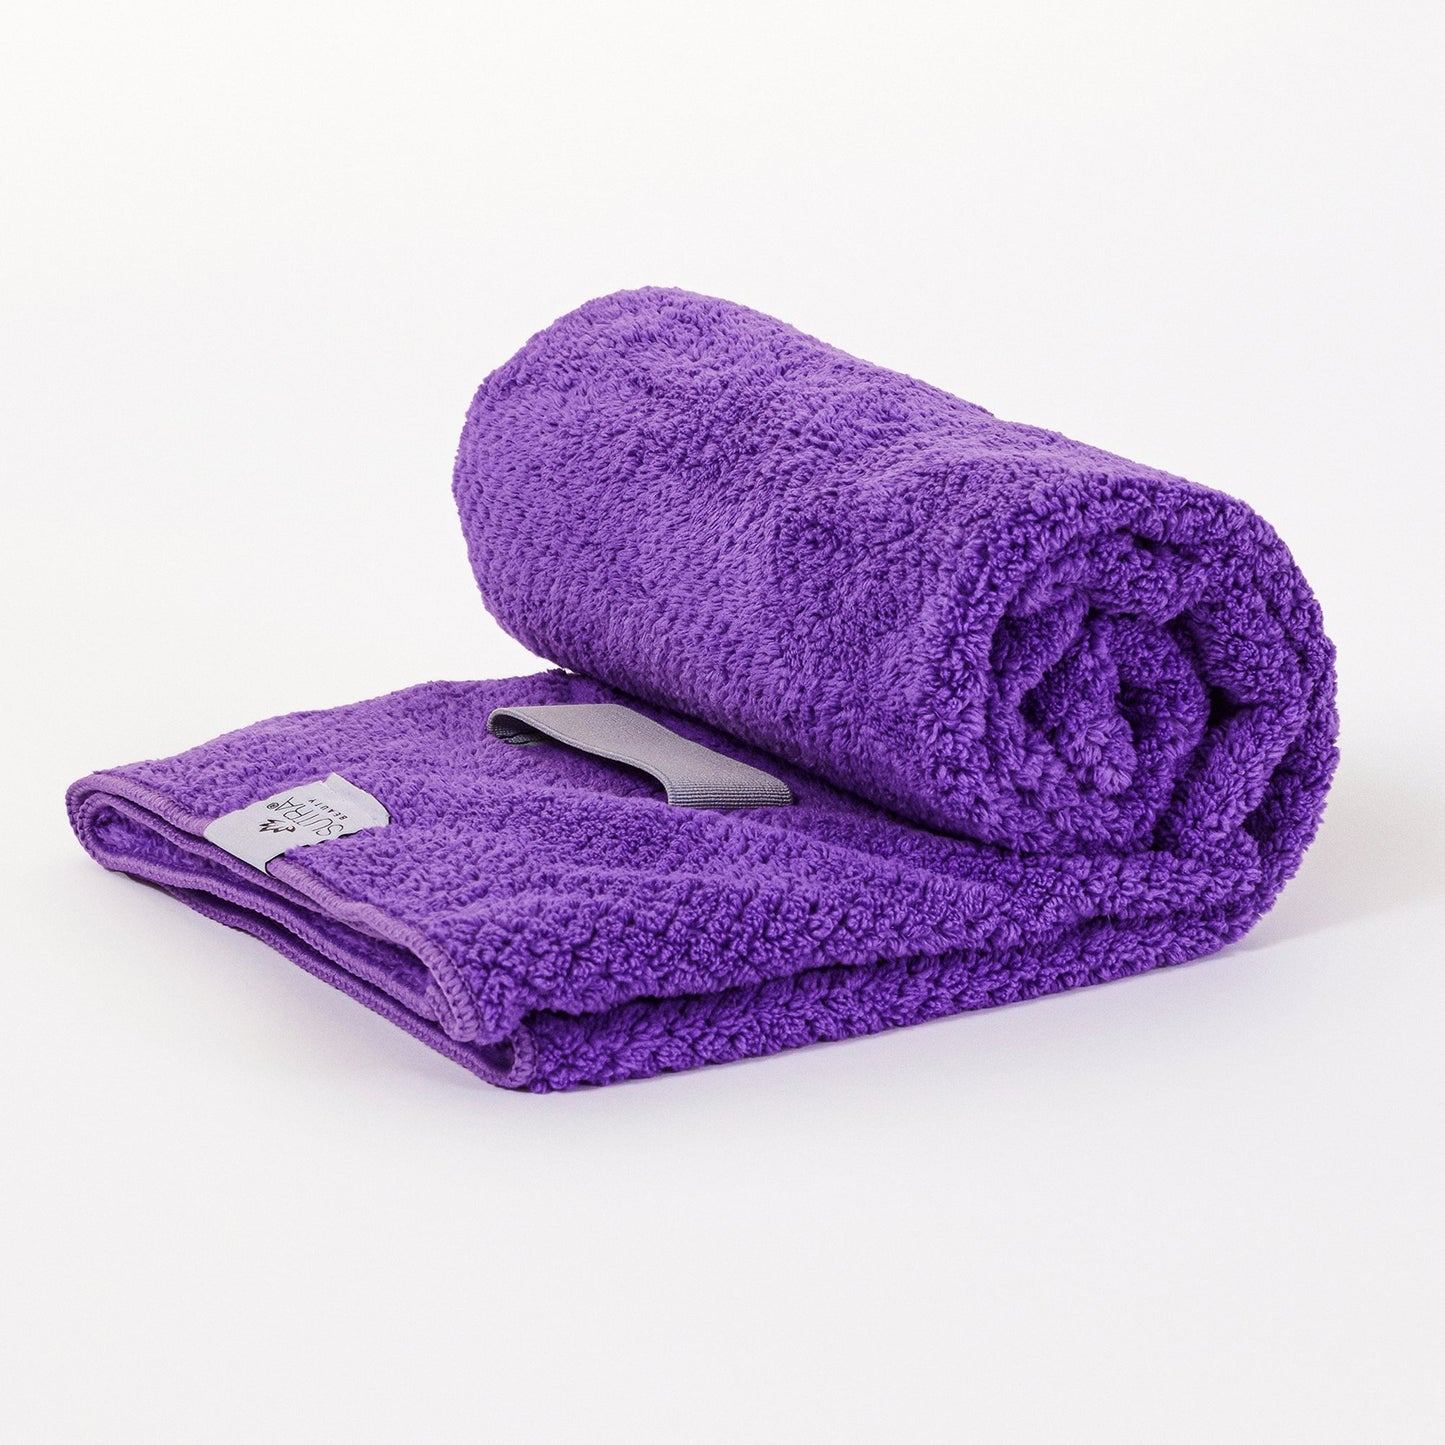 SUTRA: Fast Dry Microfiber Hair Towel